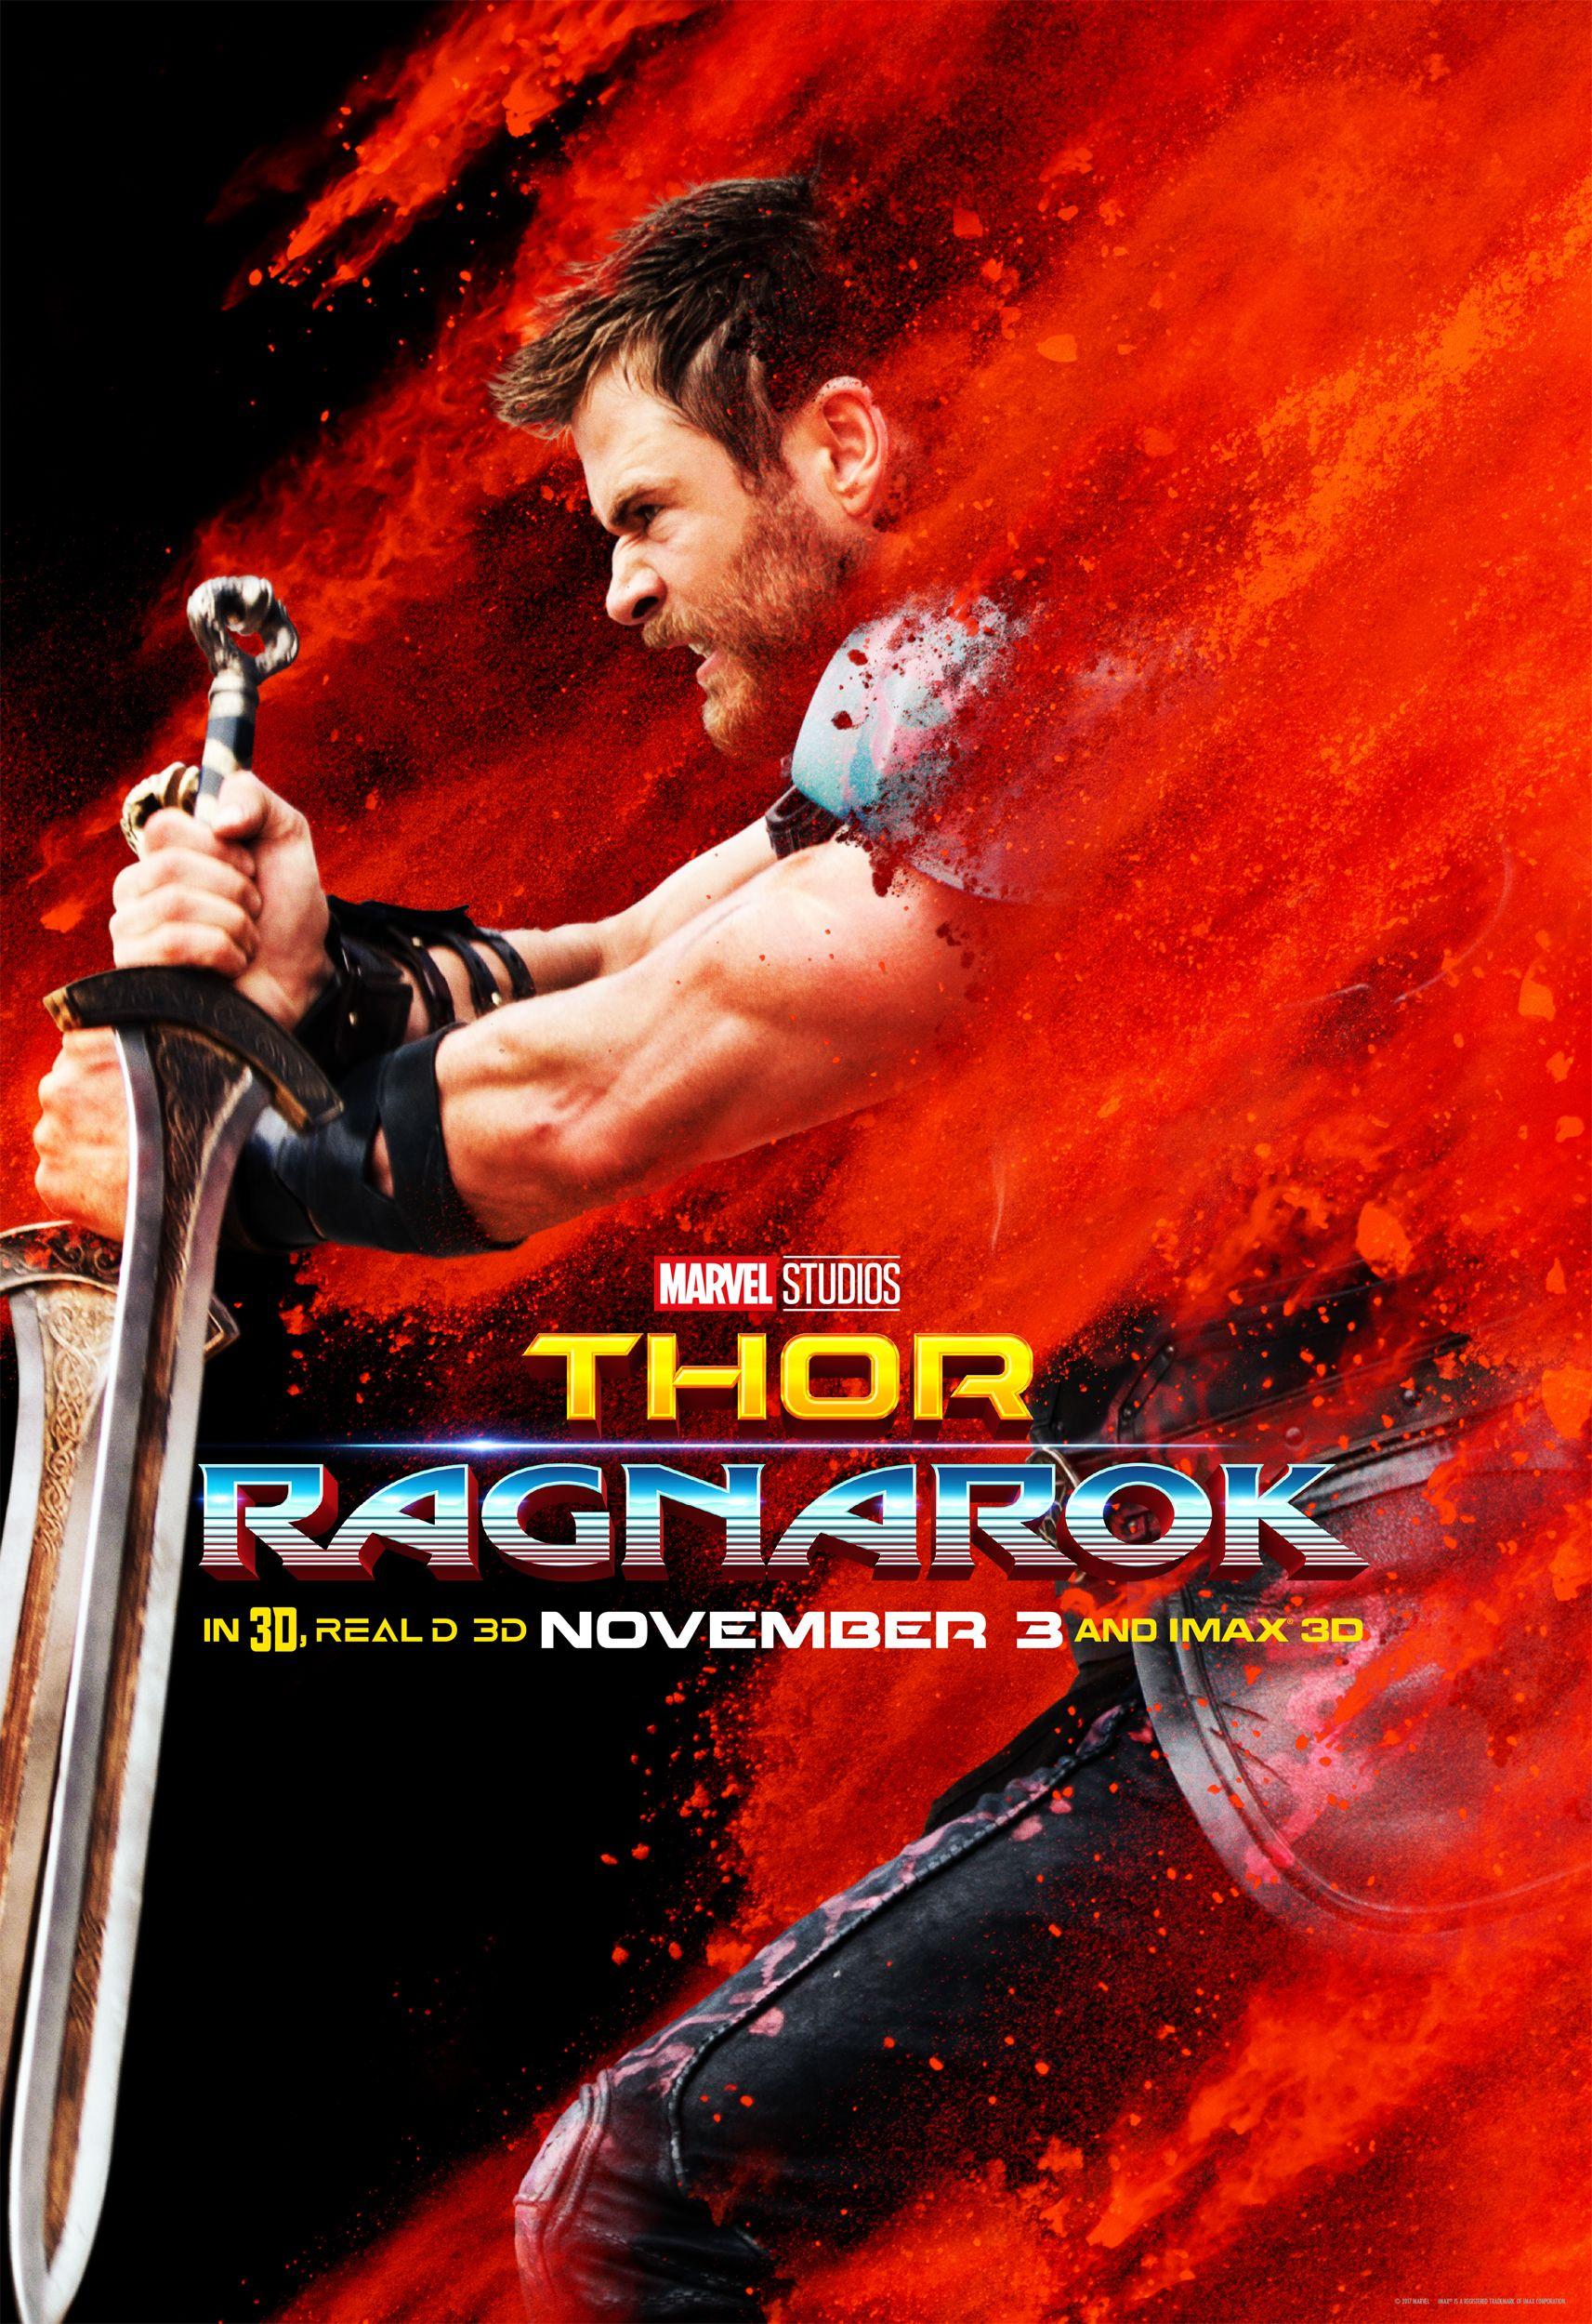 Thor Ragnarok: New Image of a Shirtless Chris Hemsworth